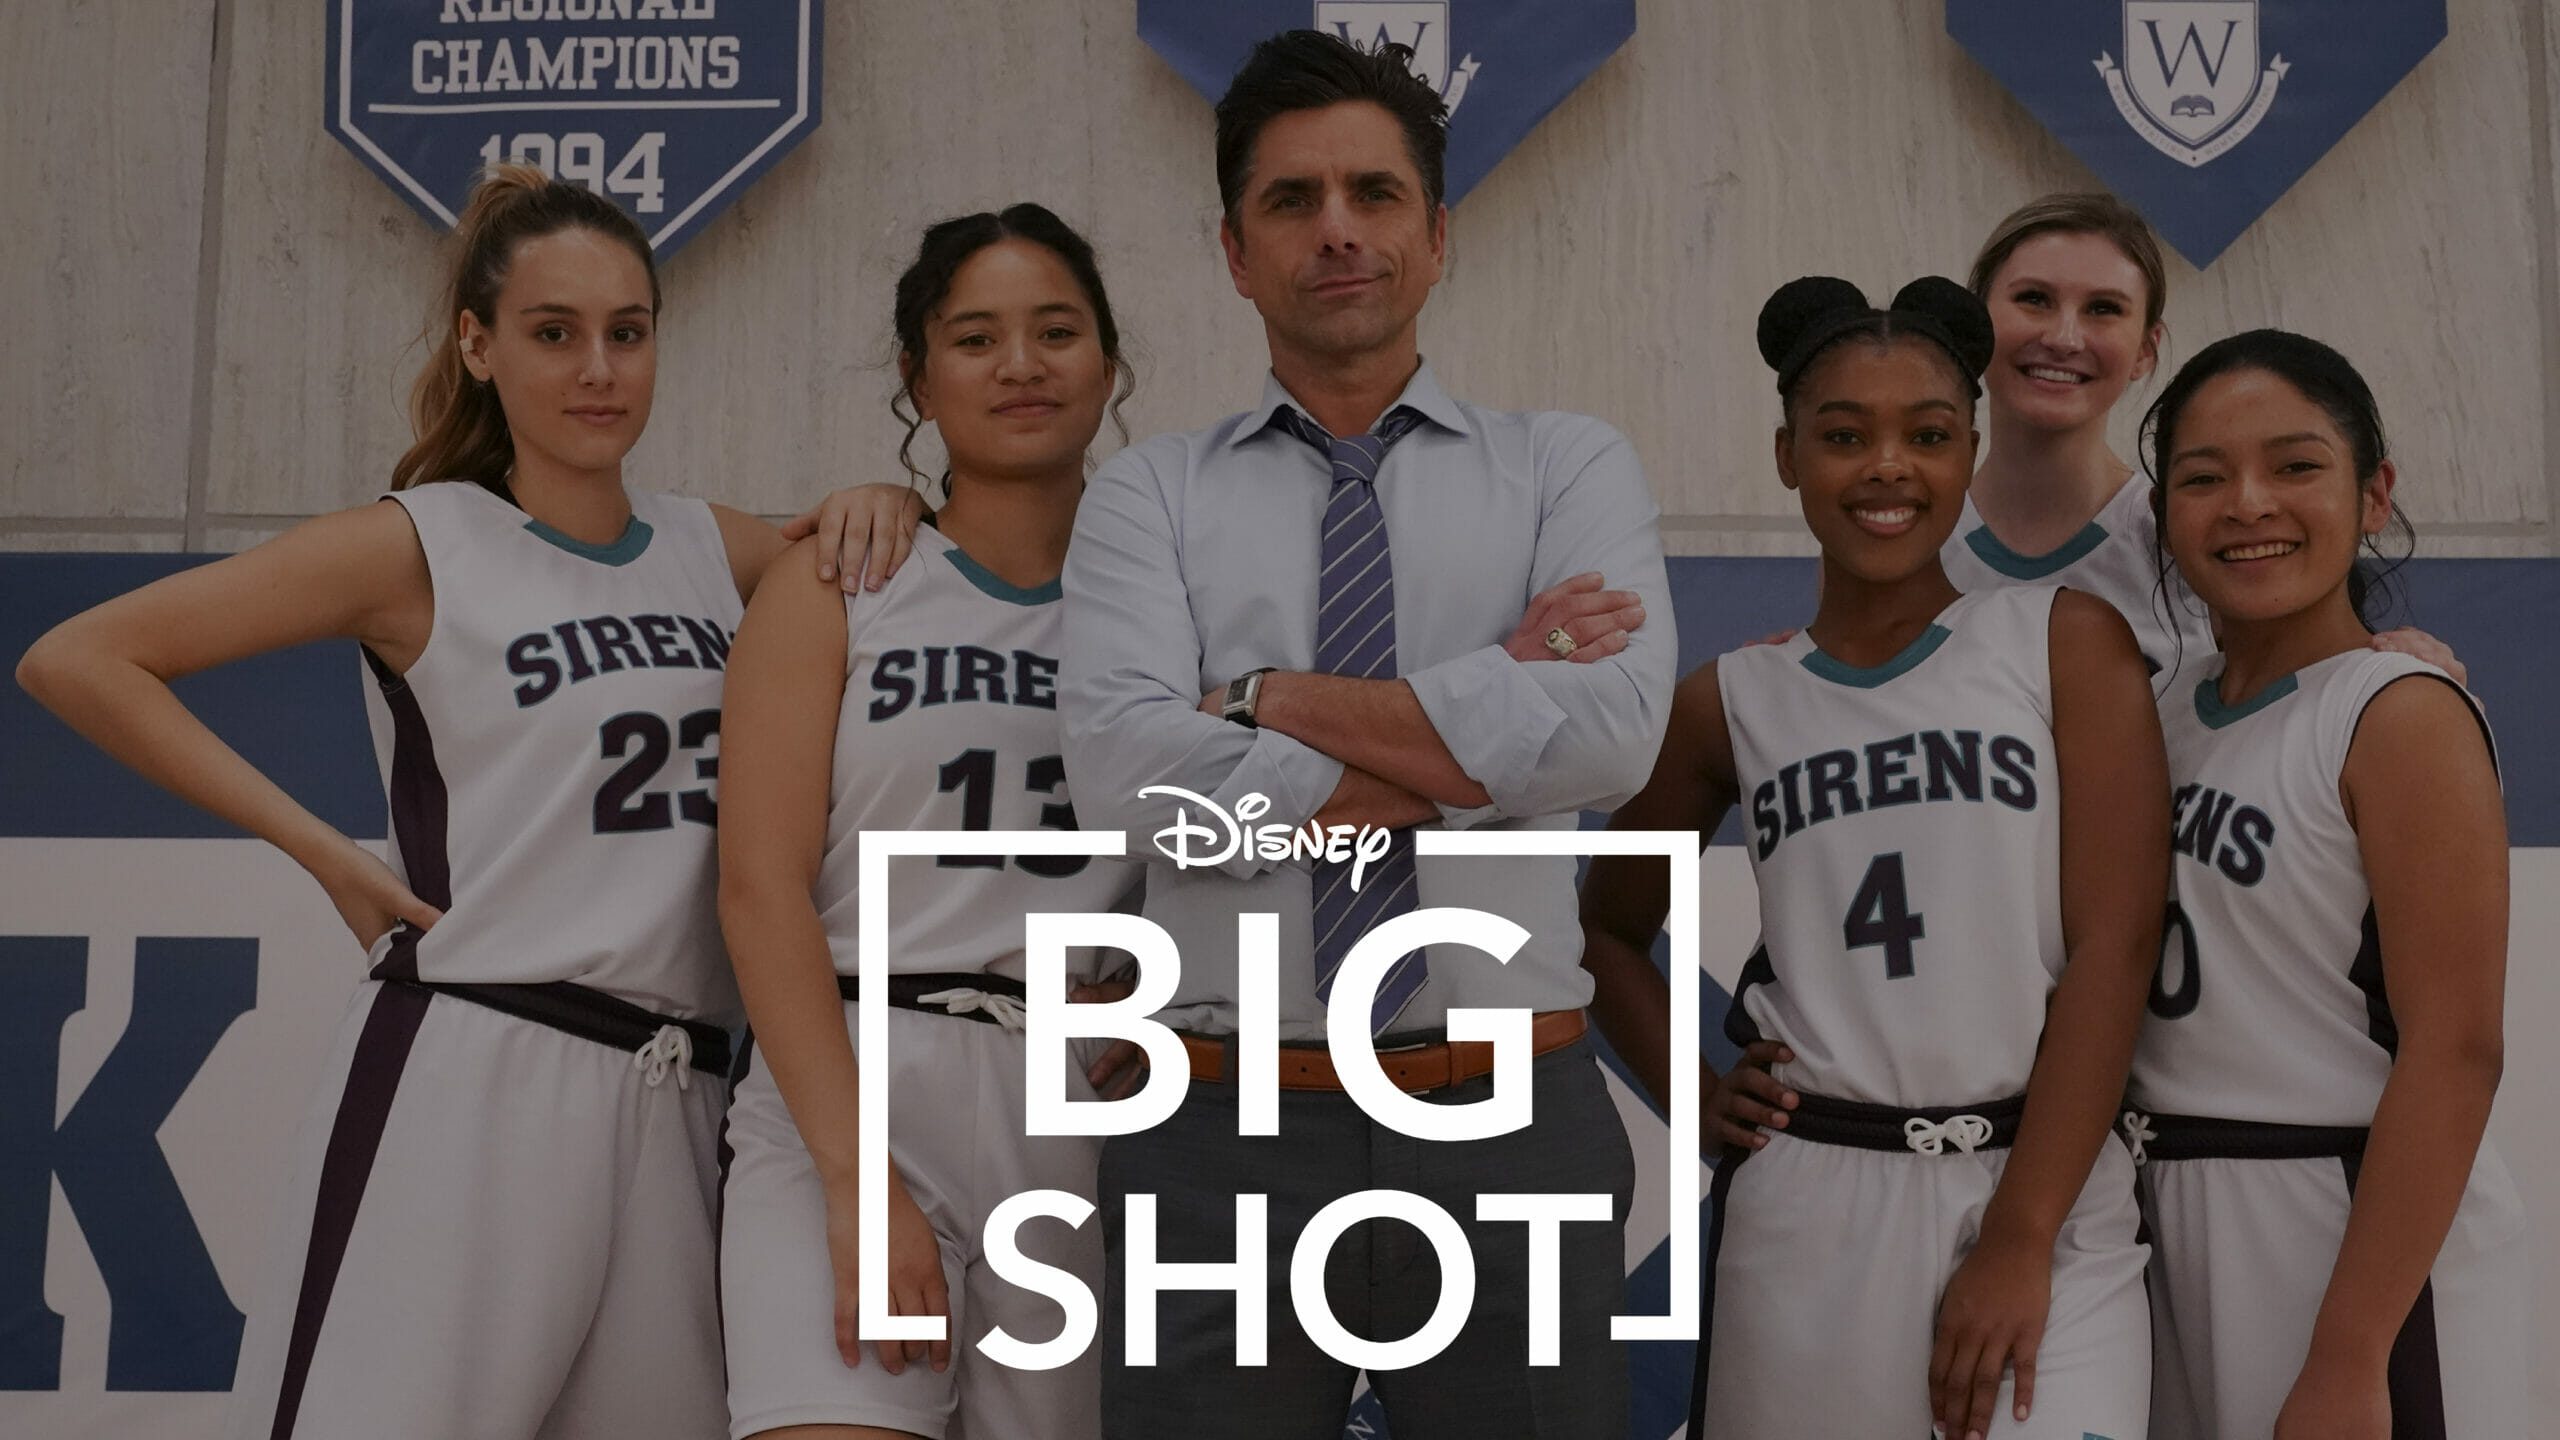 Big Shot Season 2 | Official Trailer | Disney+